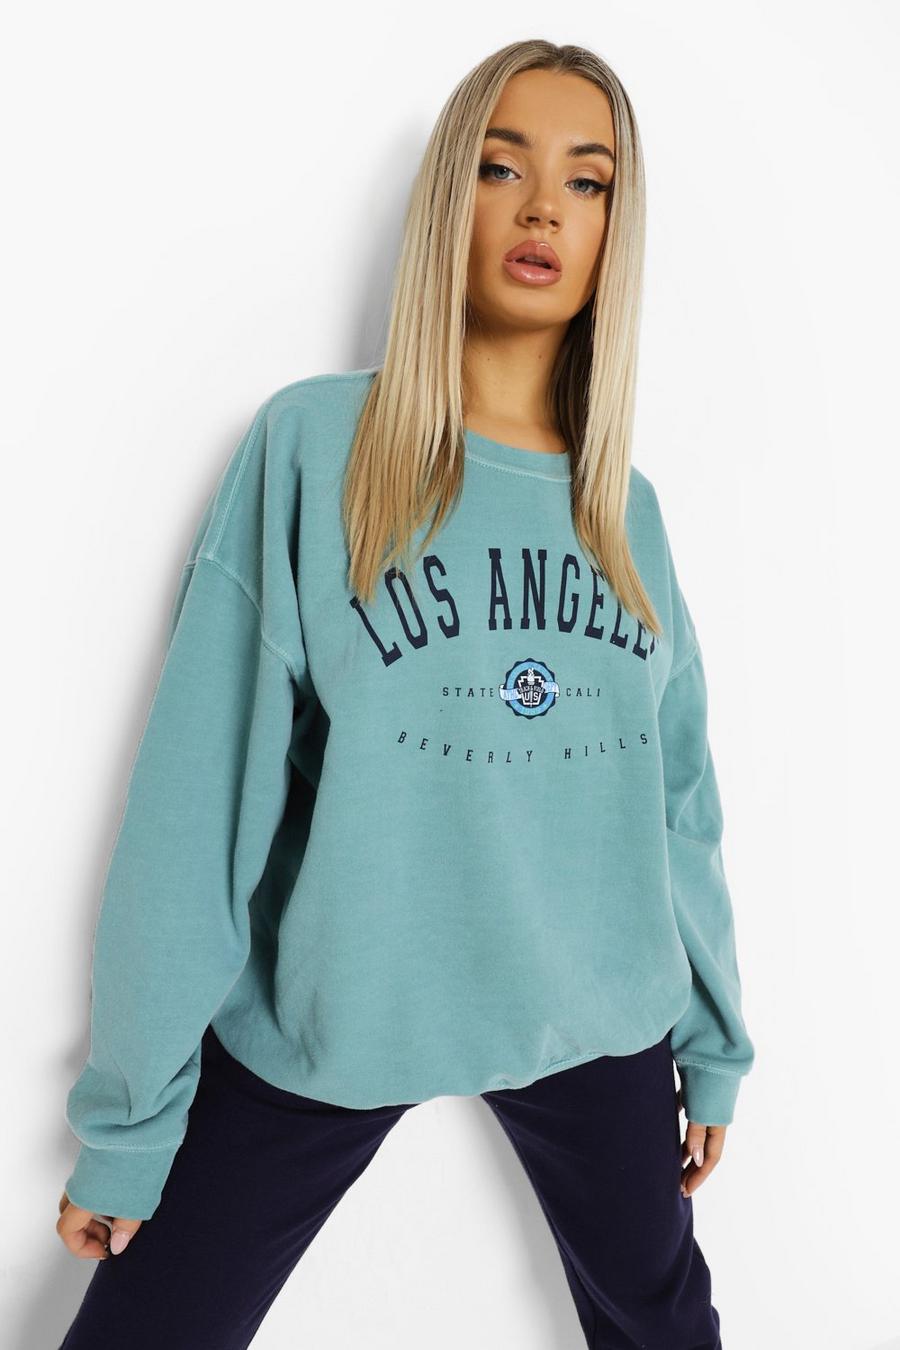 Women's Oversized Sweatshirts